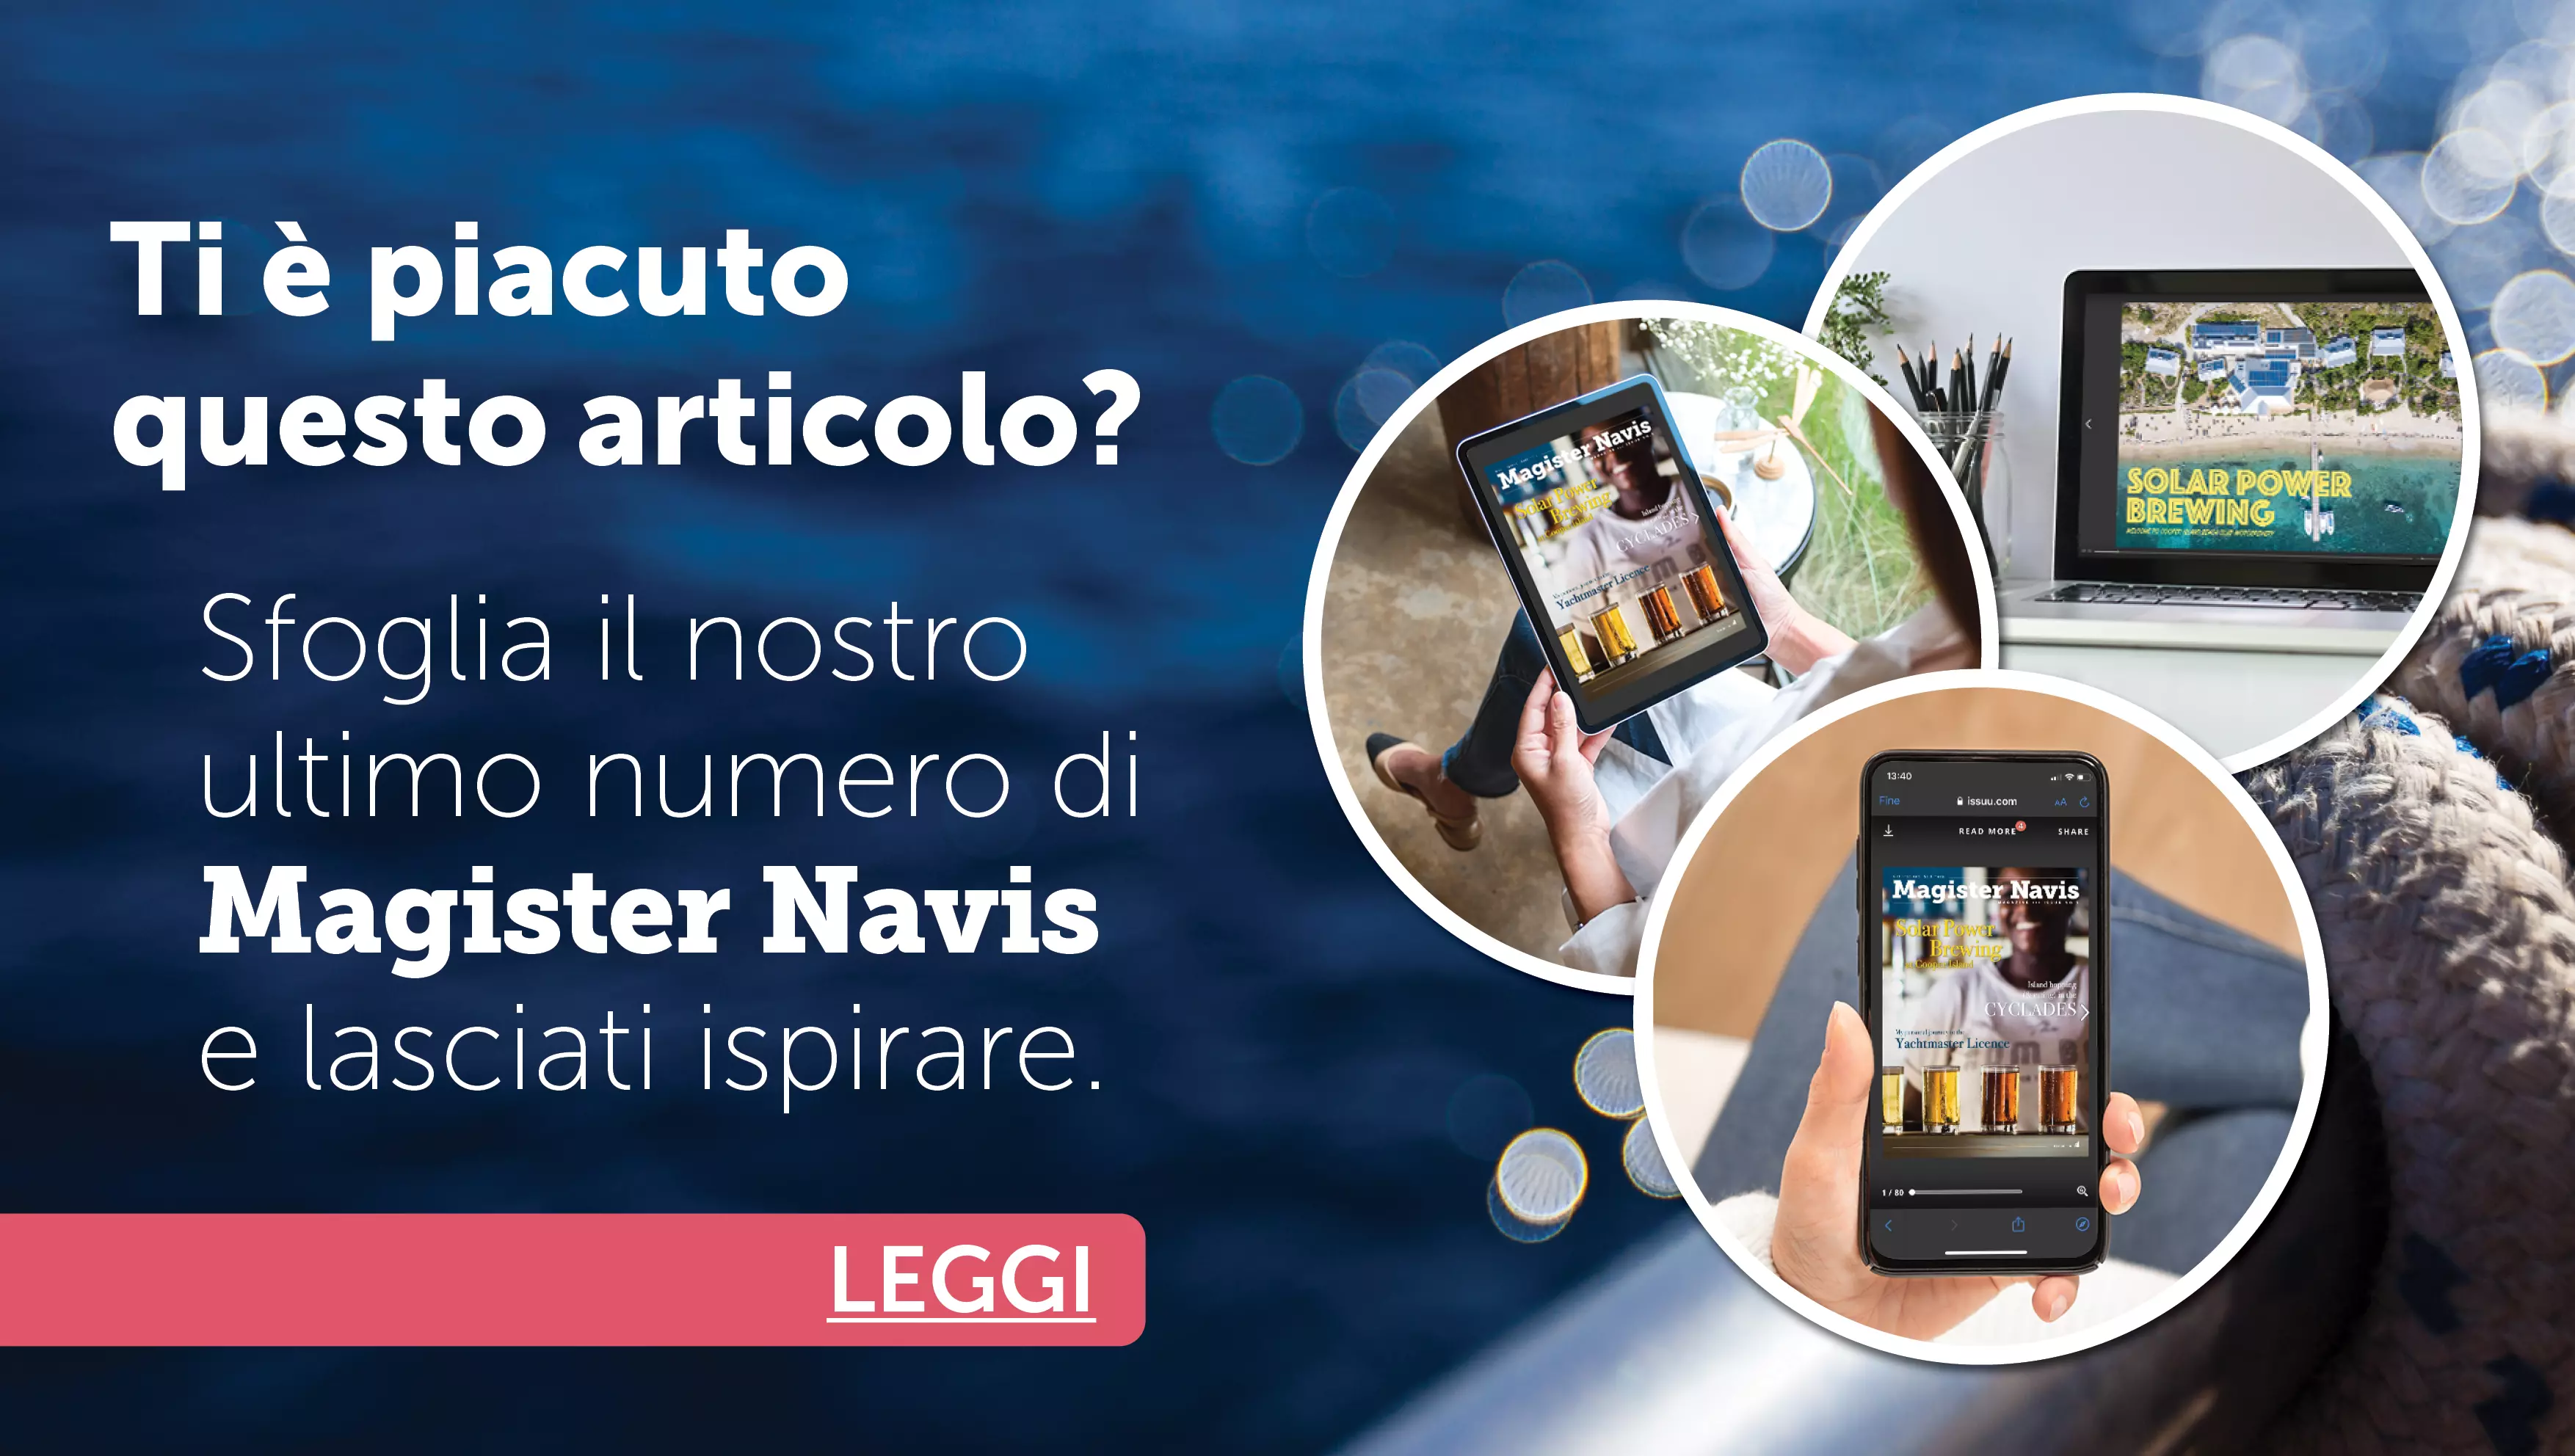 Magister Navis international Issue number 3